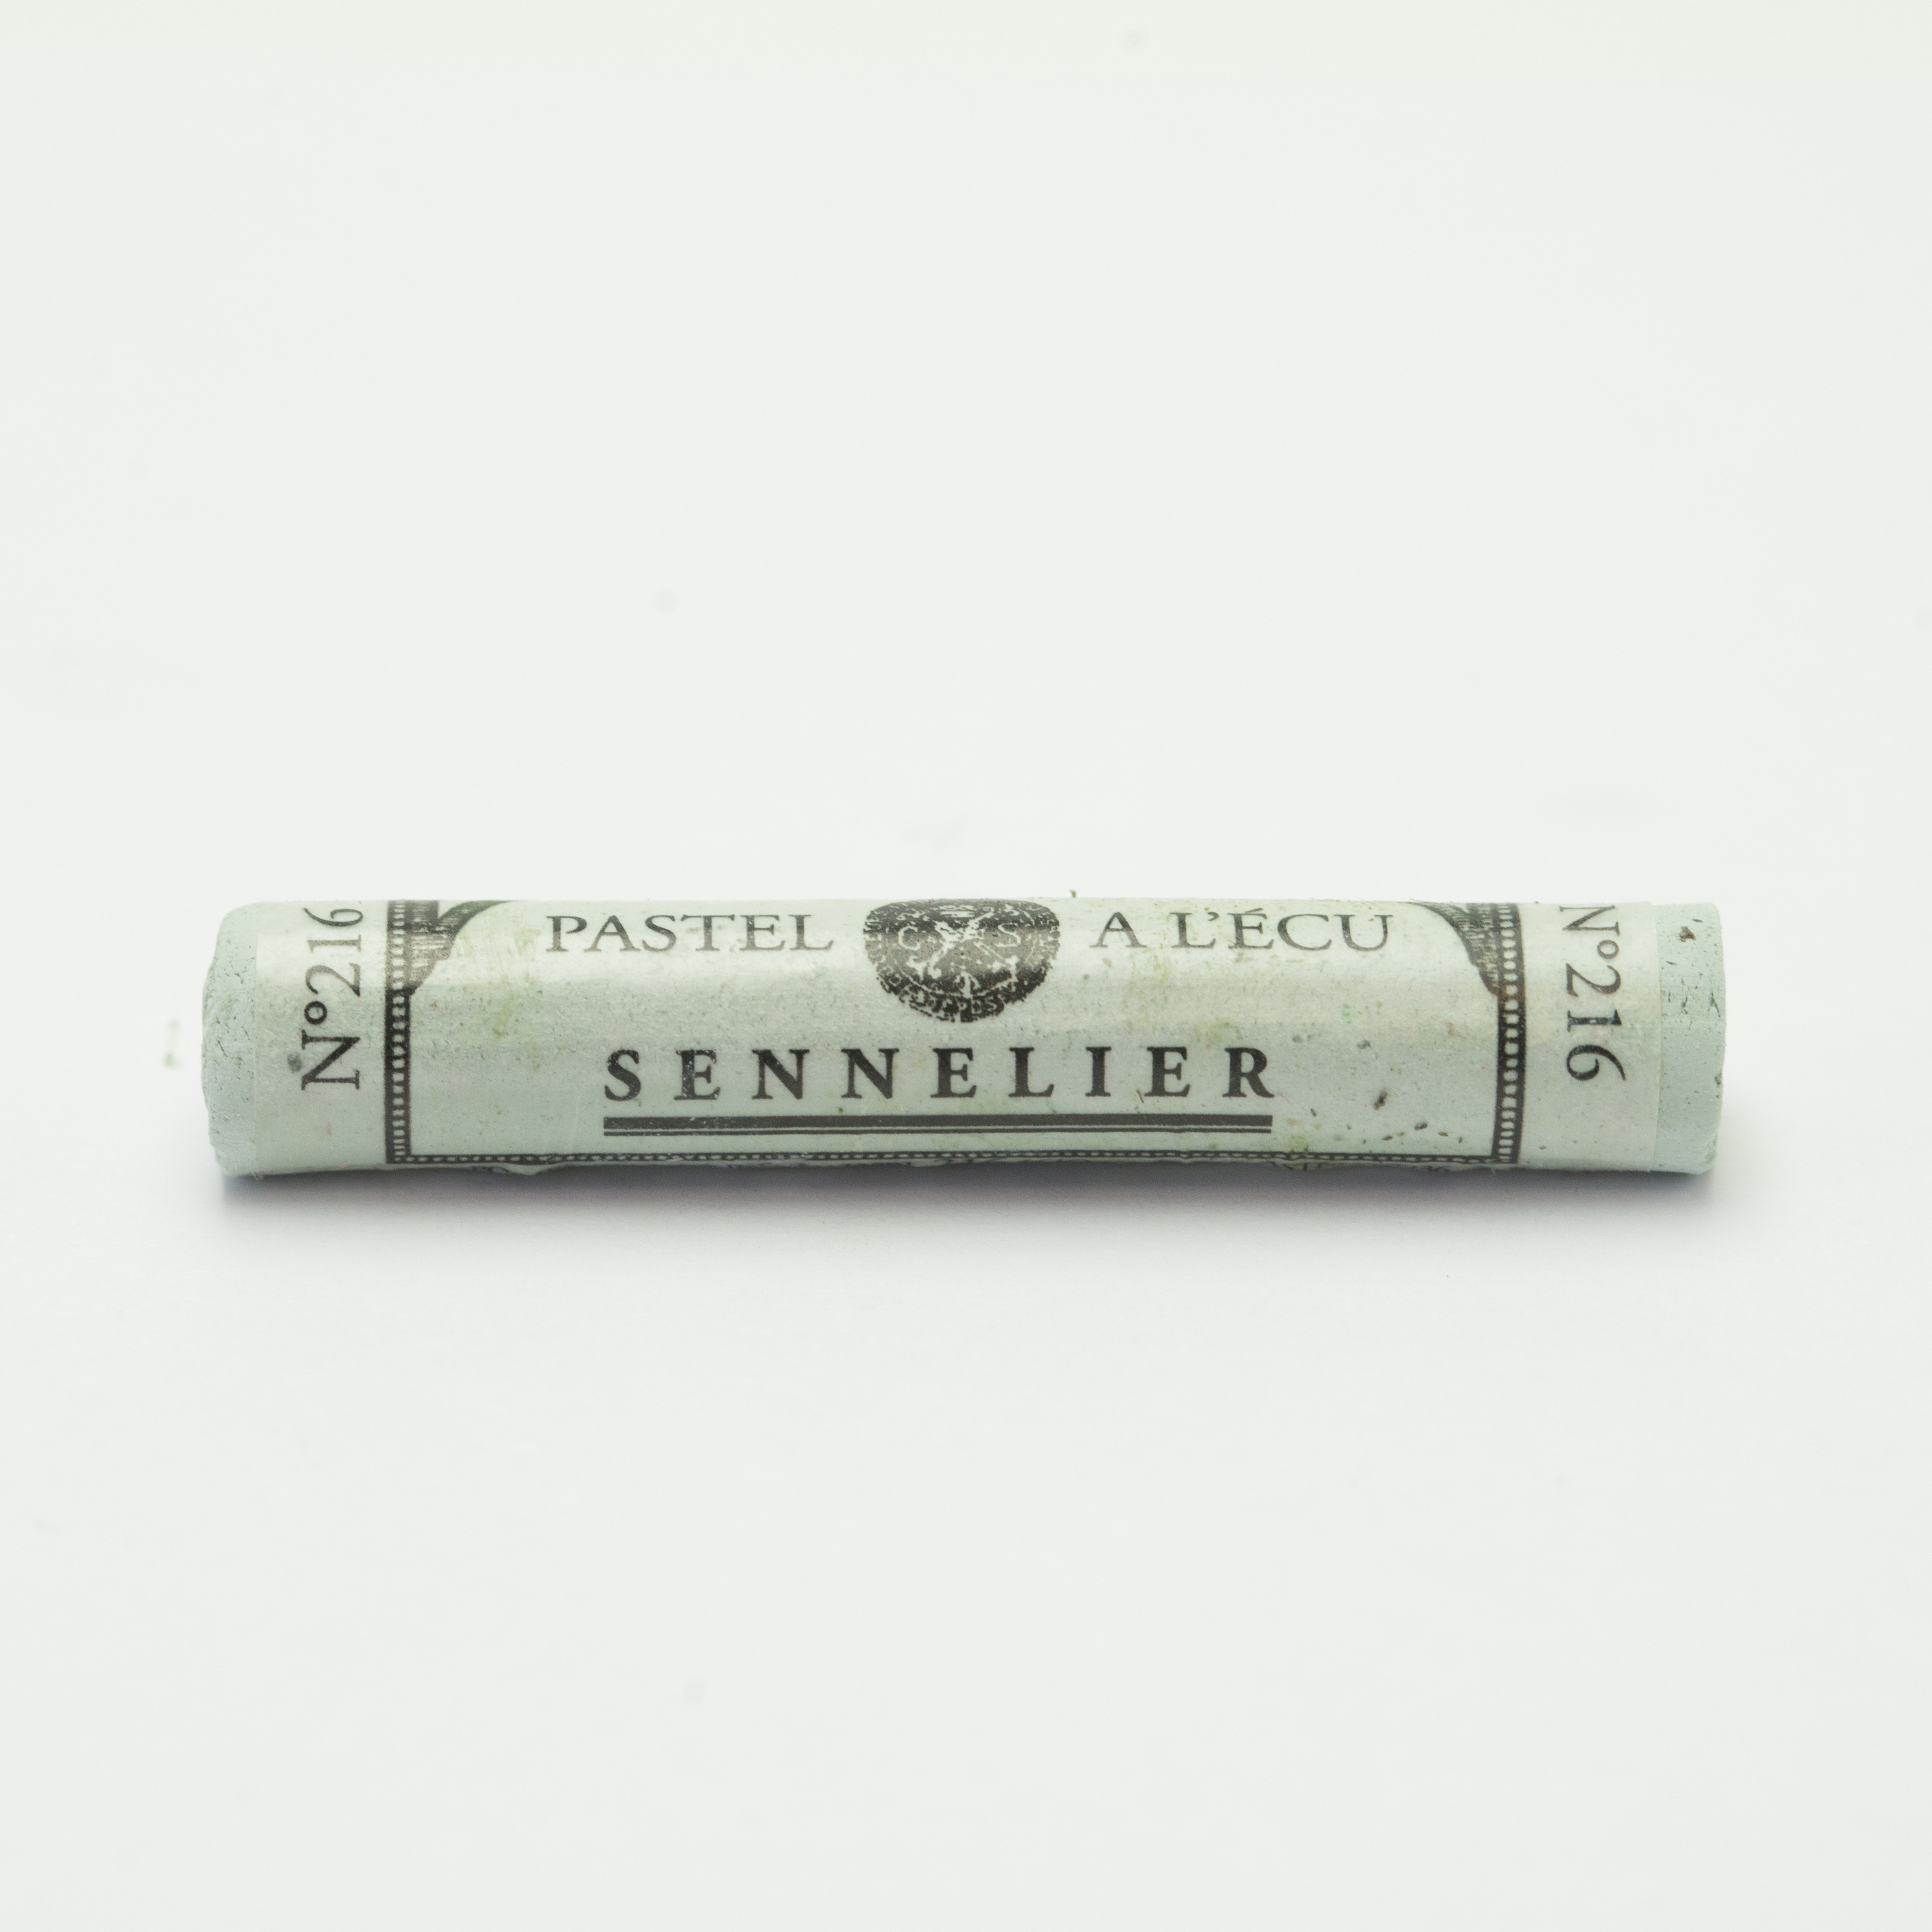 Sennelier Extra Soft Pastels - Reseda Grey Green 216